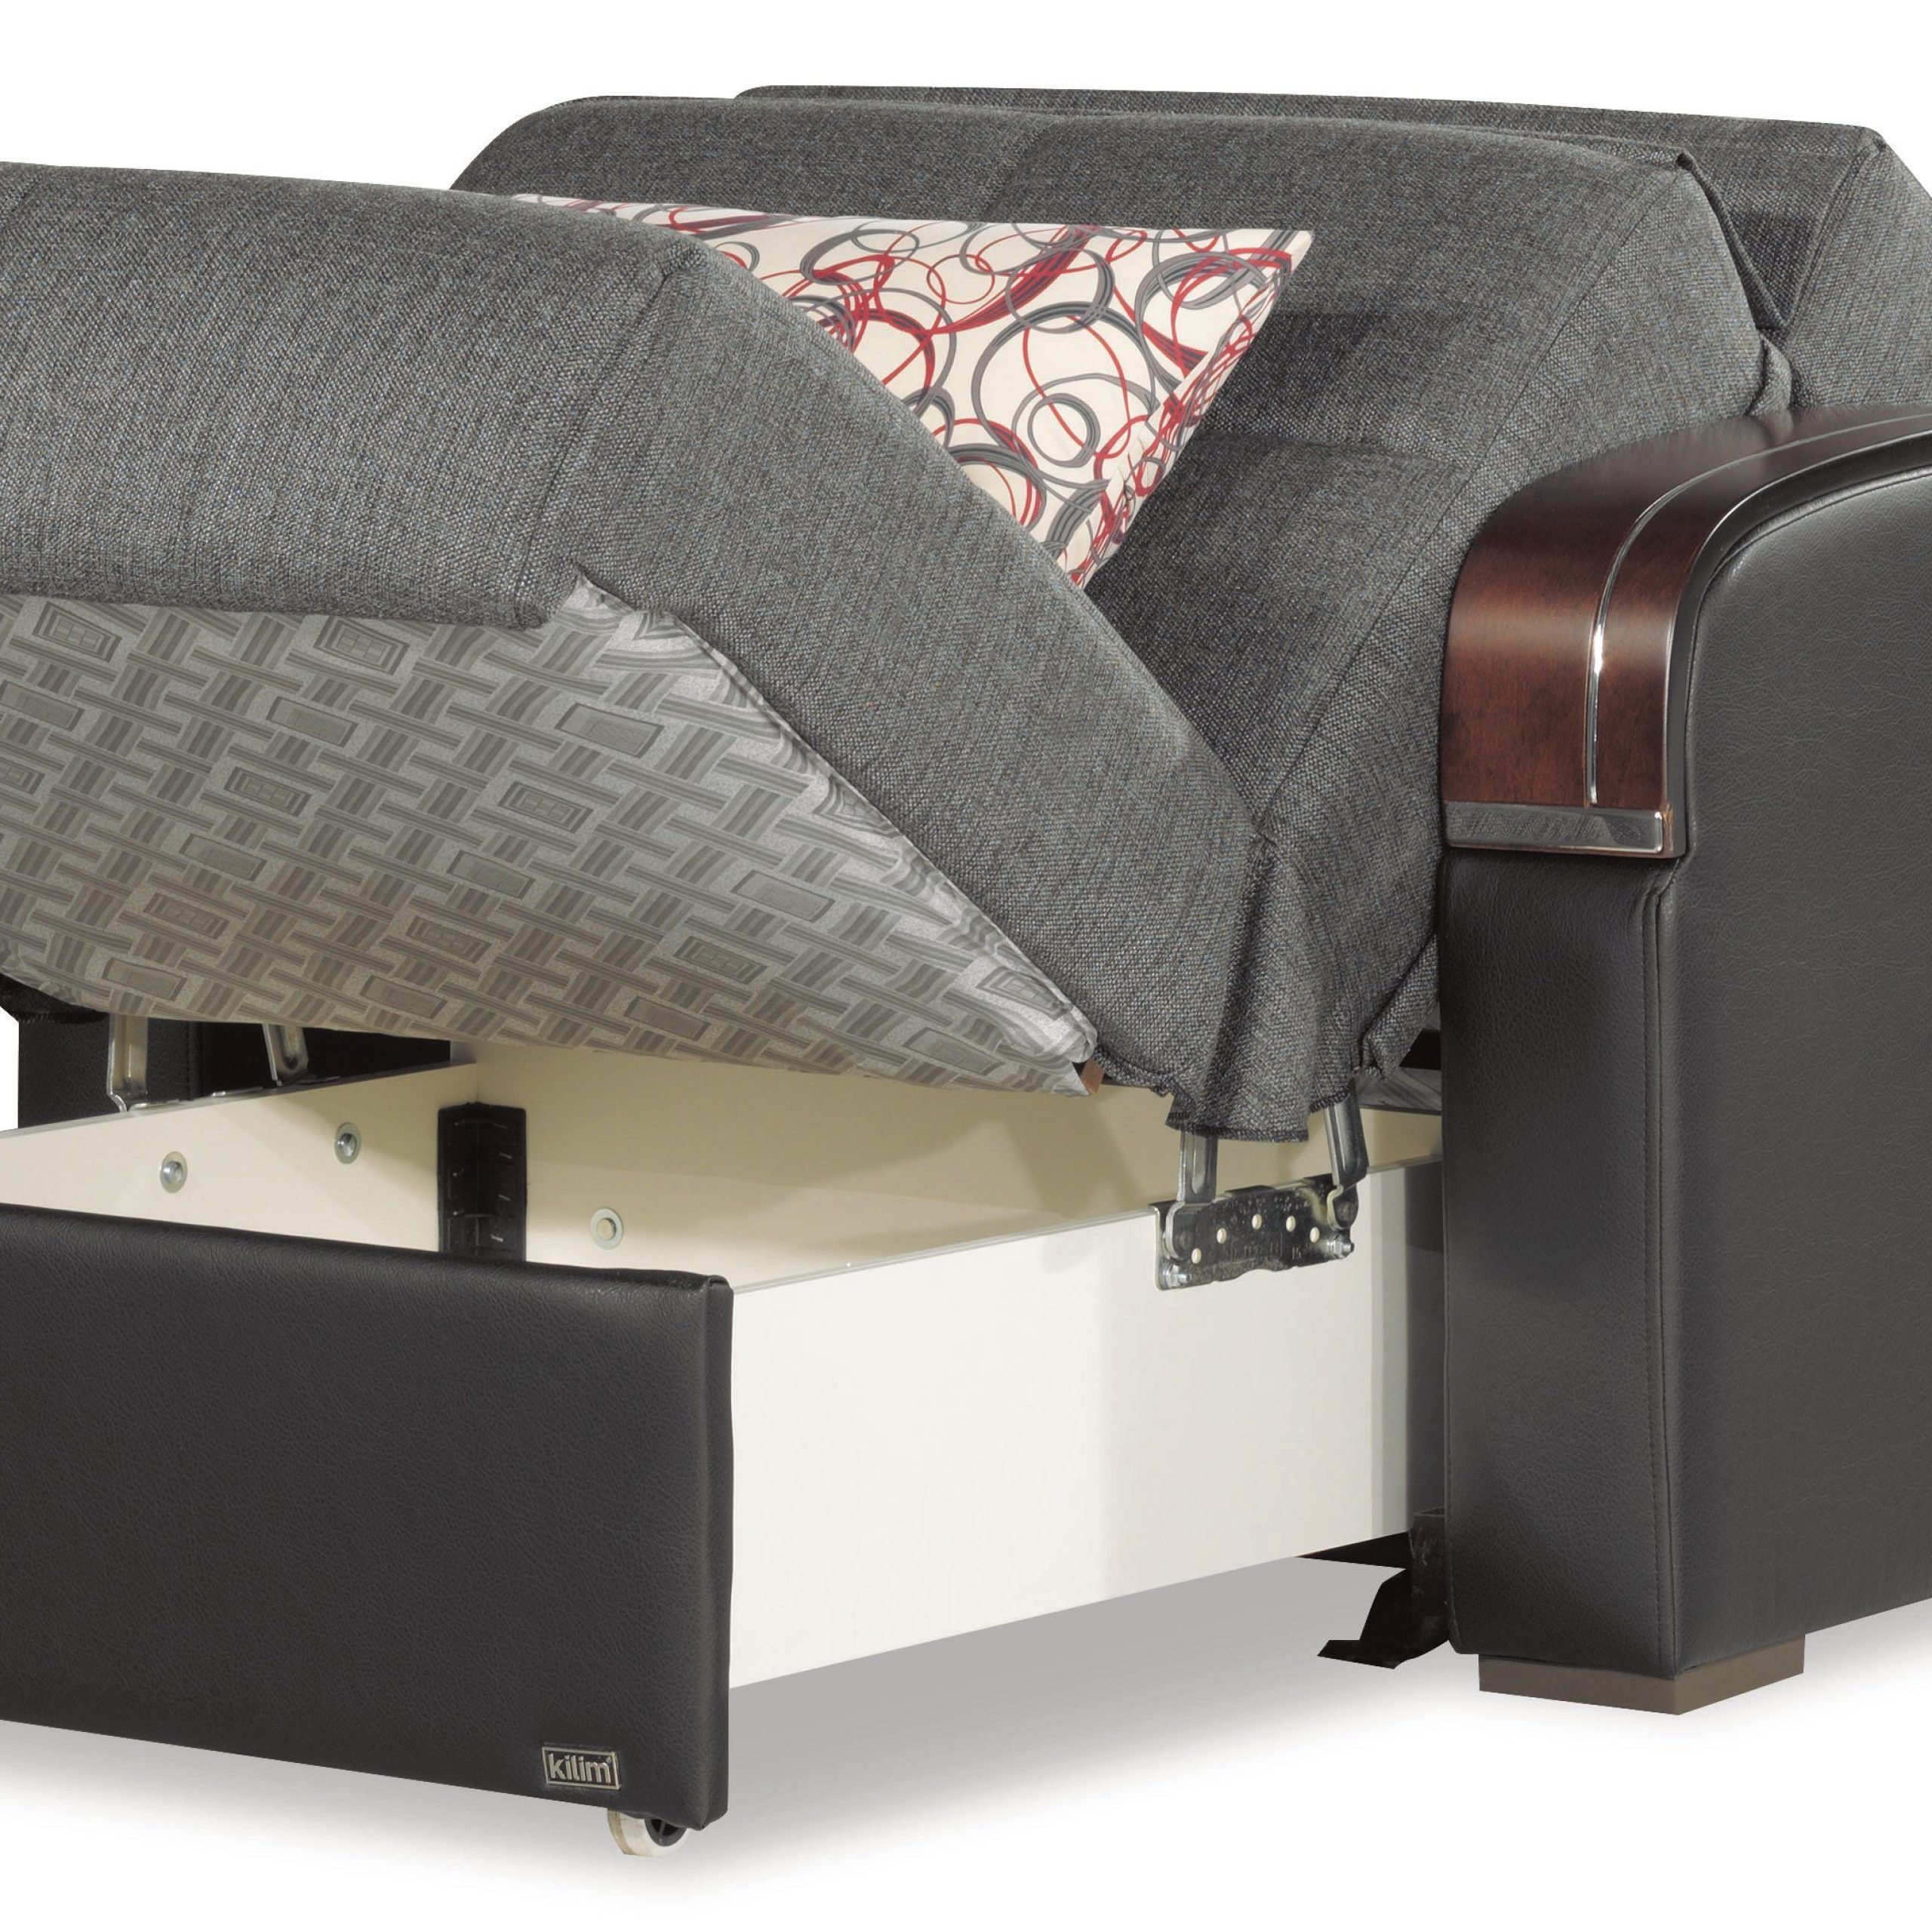 Sleep Plus Gray Convertible Chair Bedcasamode With Regard To 4 In 1 Convertible Sleeper Chair Beds (Gallery 8 of 20)